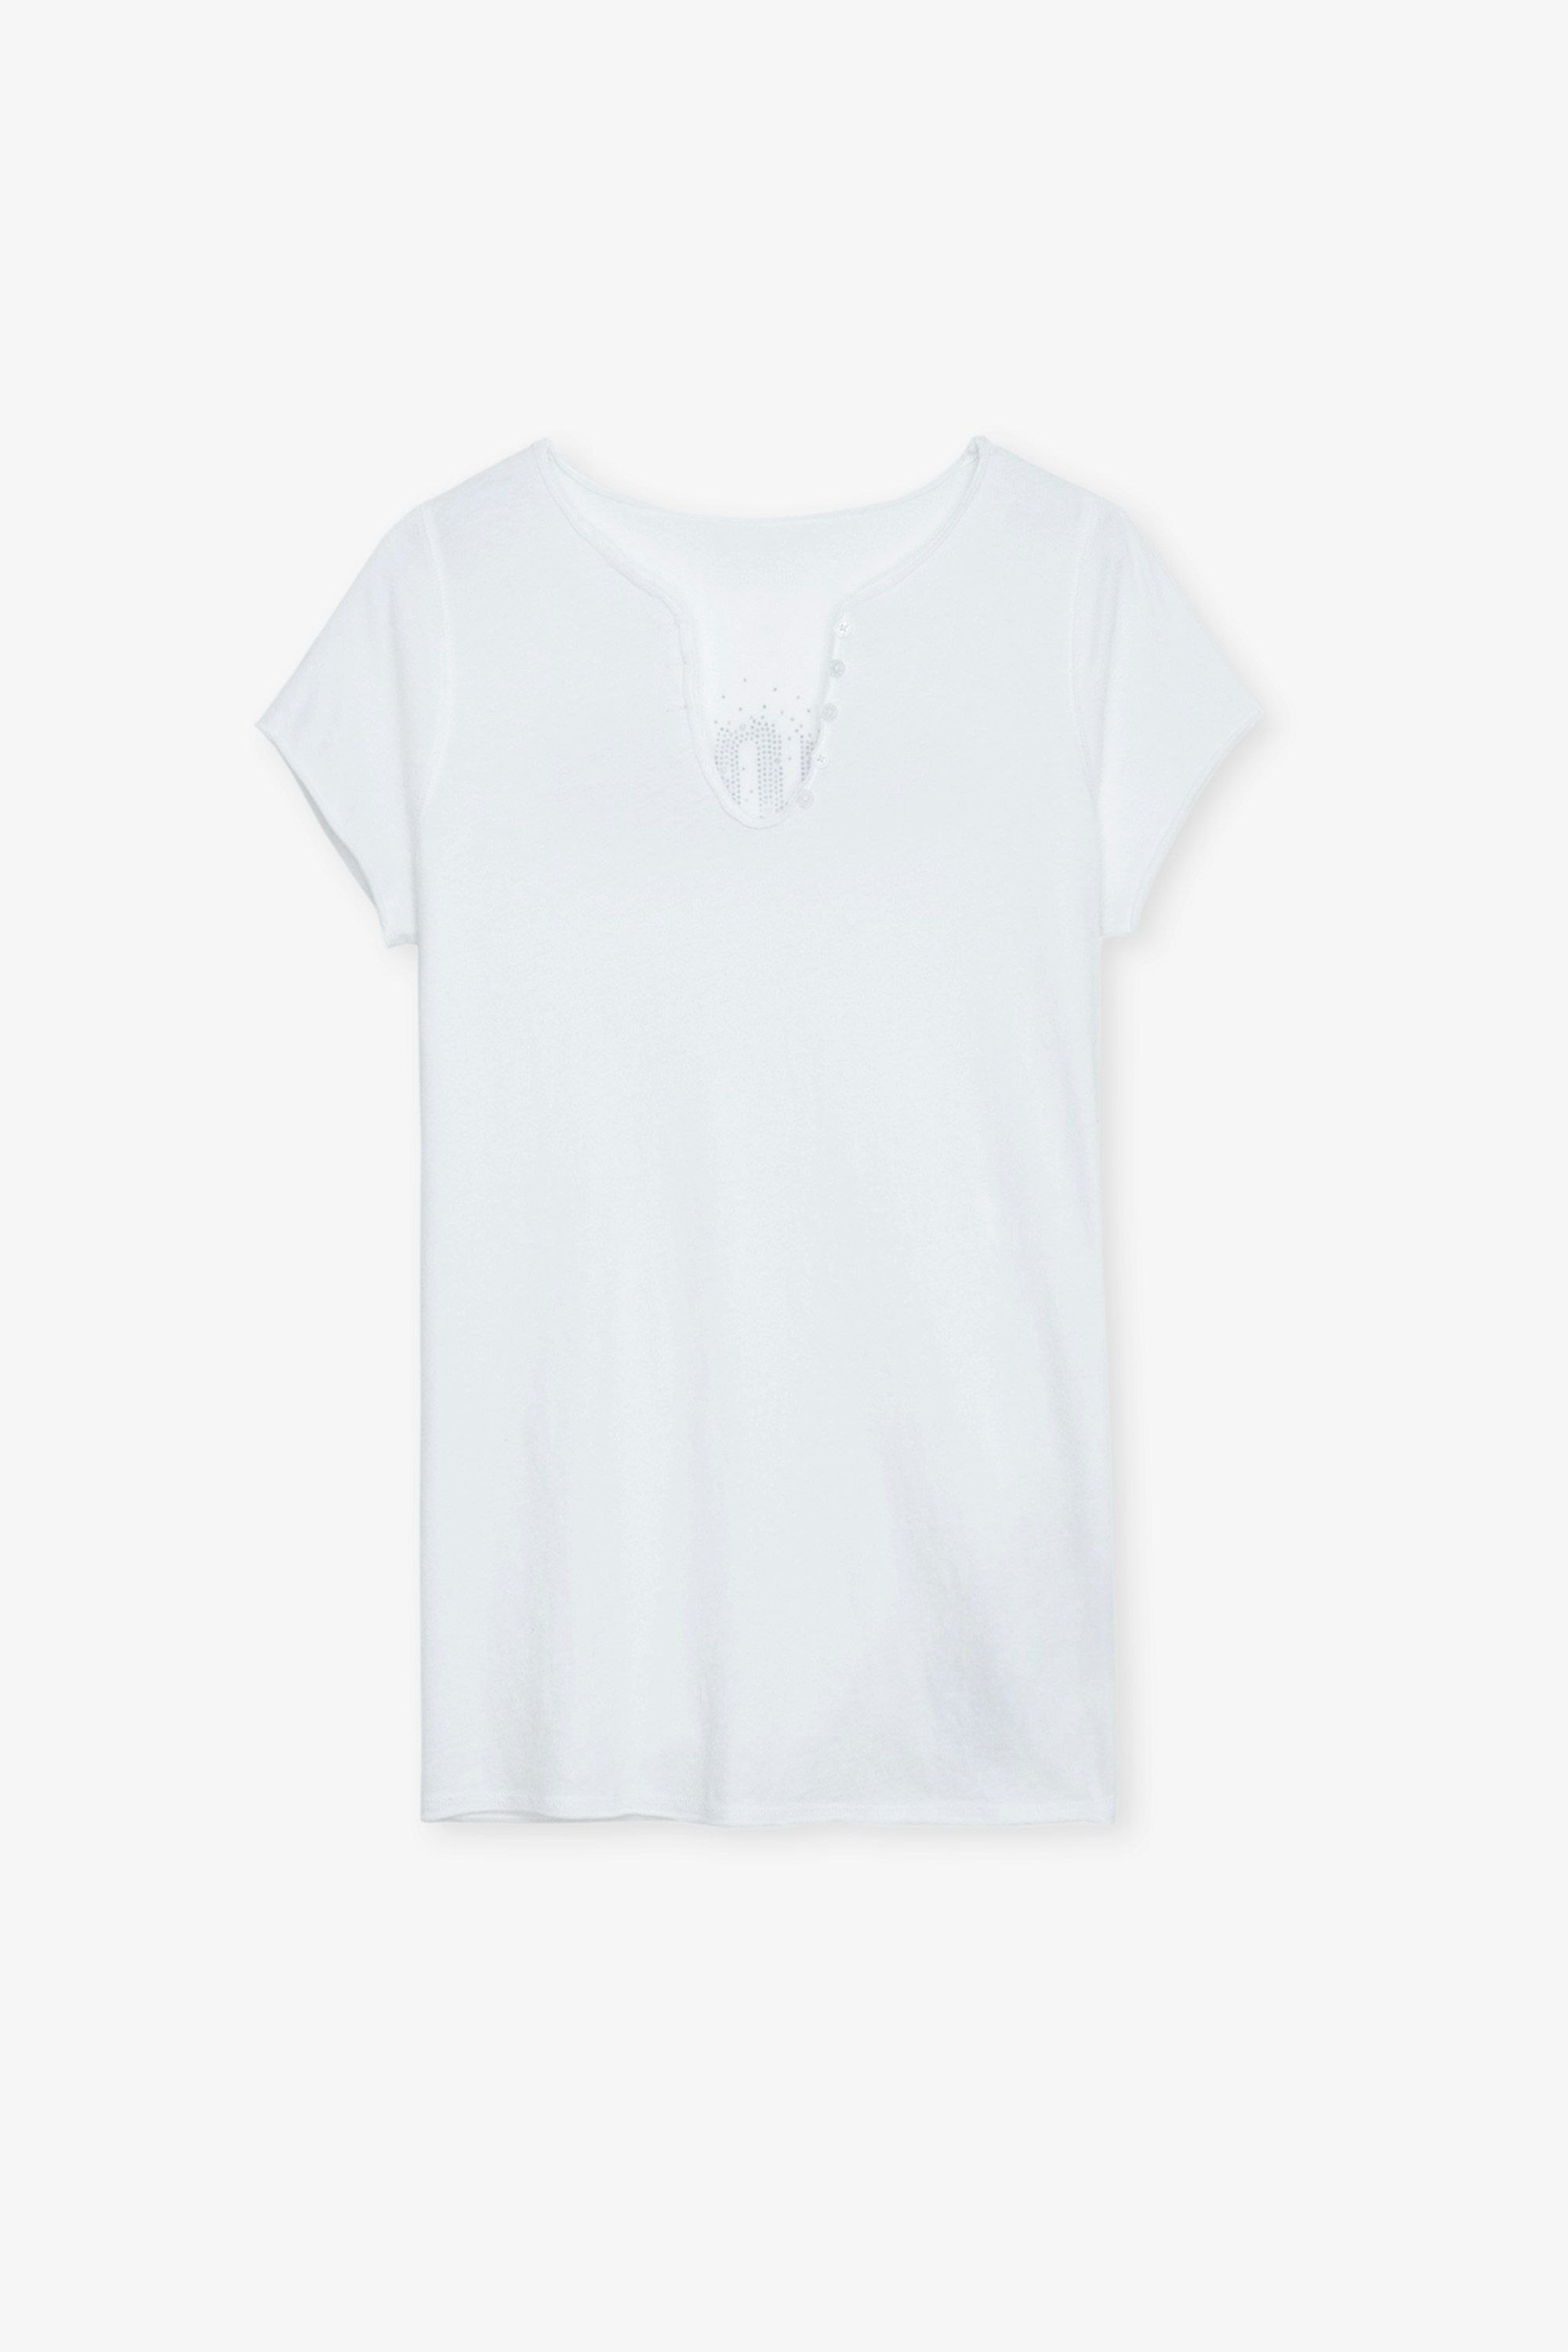 Amour Strass Henley T-shirt - Women’s white cotton Henley T-shirt with diamanté “Amour” slogan on the back.